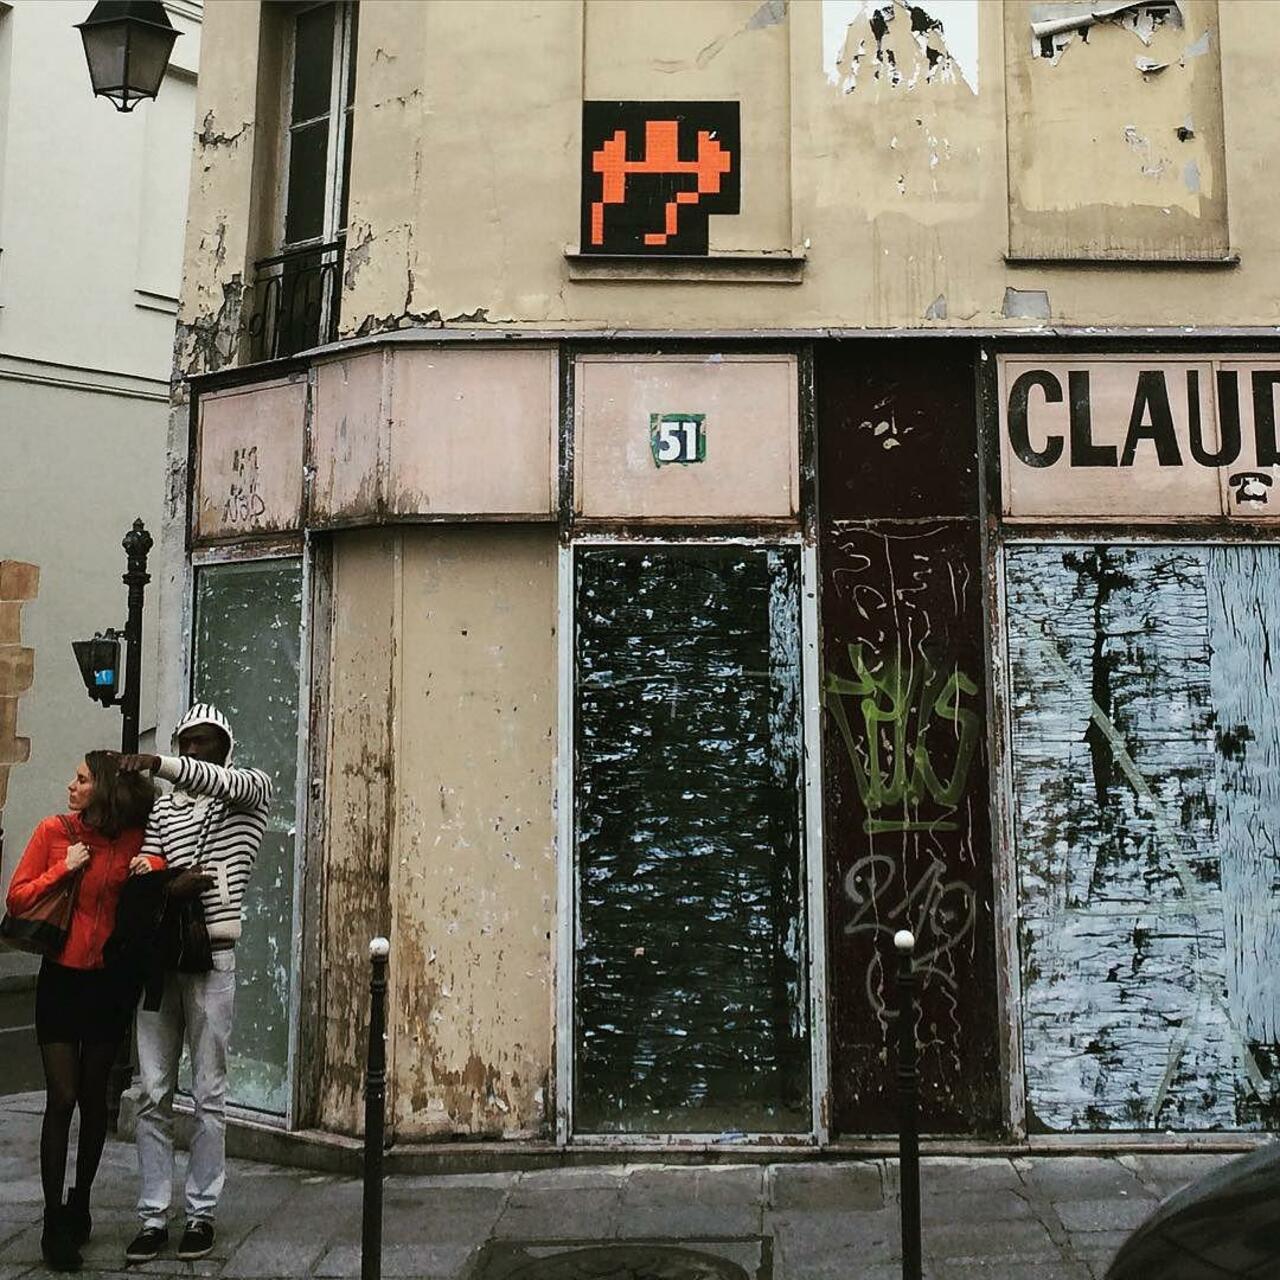 #Paris #graffiti photo by @julienvermeulen http://ift.tt/1QpqaVw #StreetArt http://t.co/ym5XSHkrio